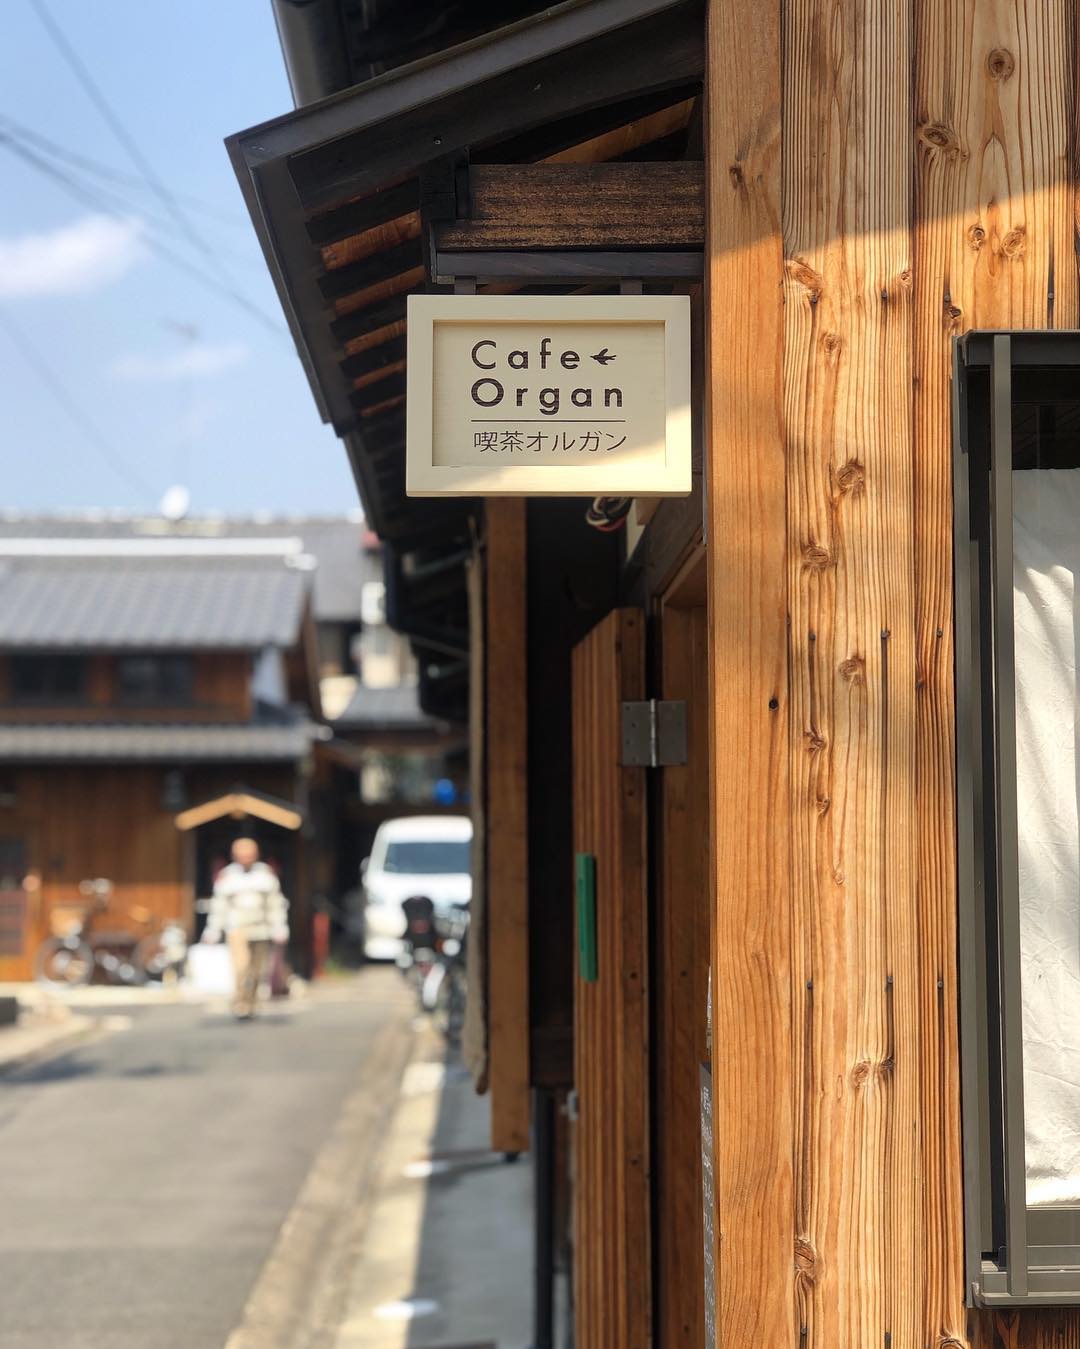 japan cafes heritage buildings - cafe organ signboard